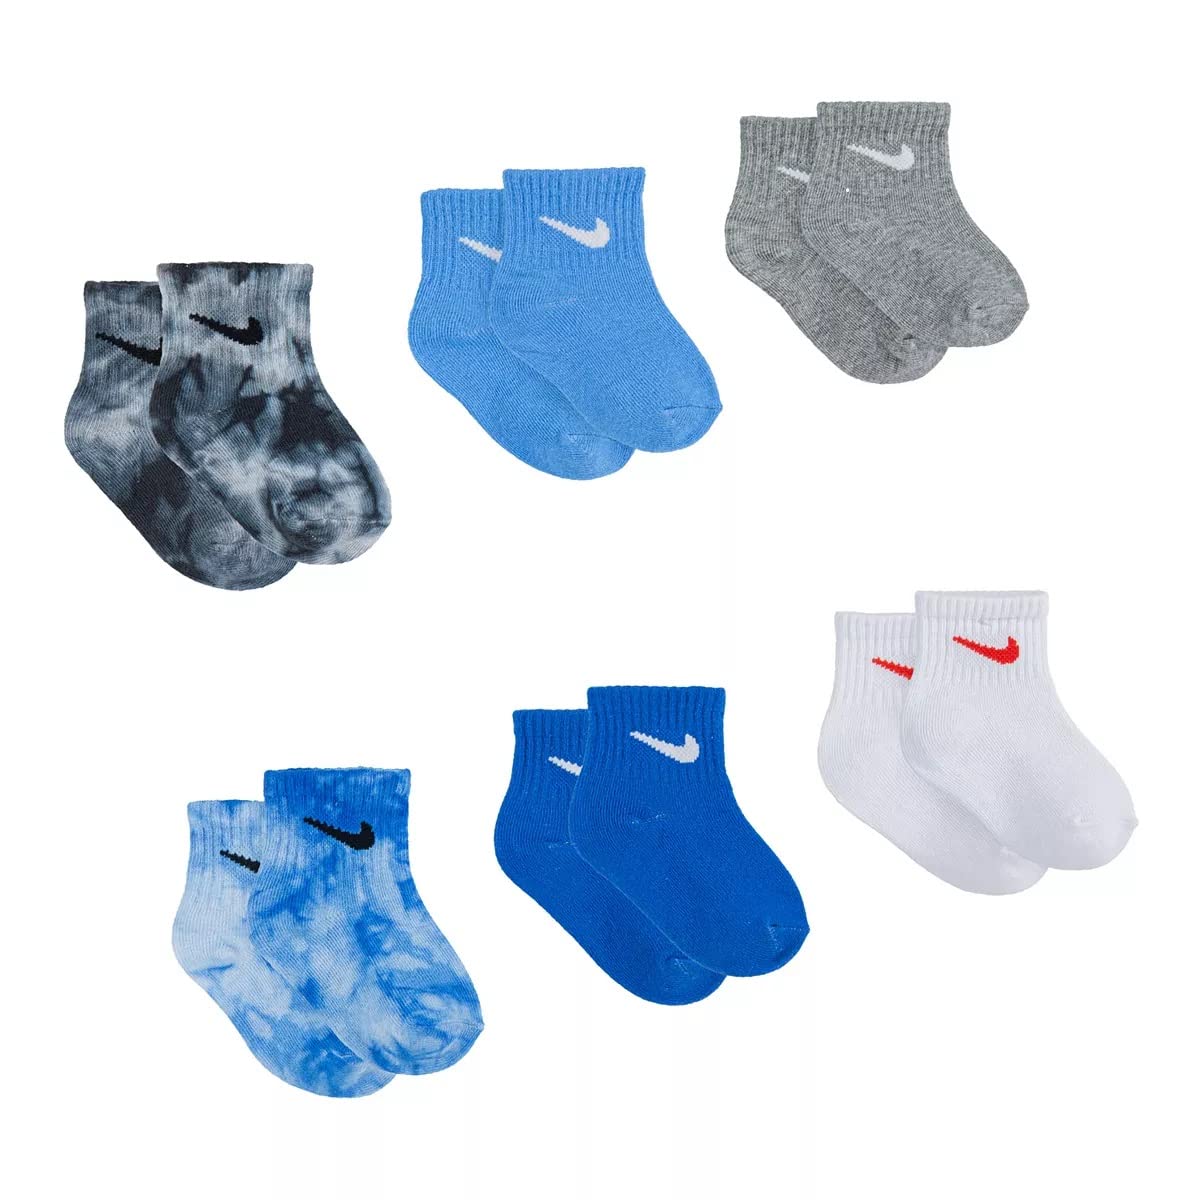 Nike Boys' Ankle Socks (6 Pairs)